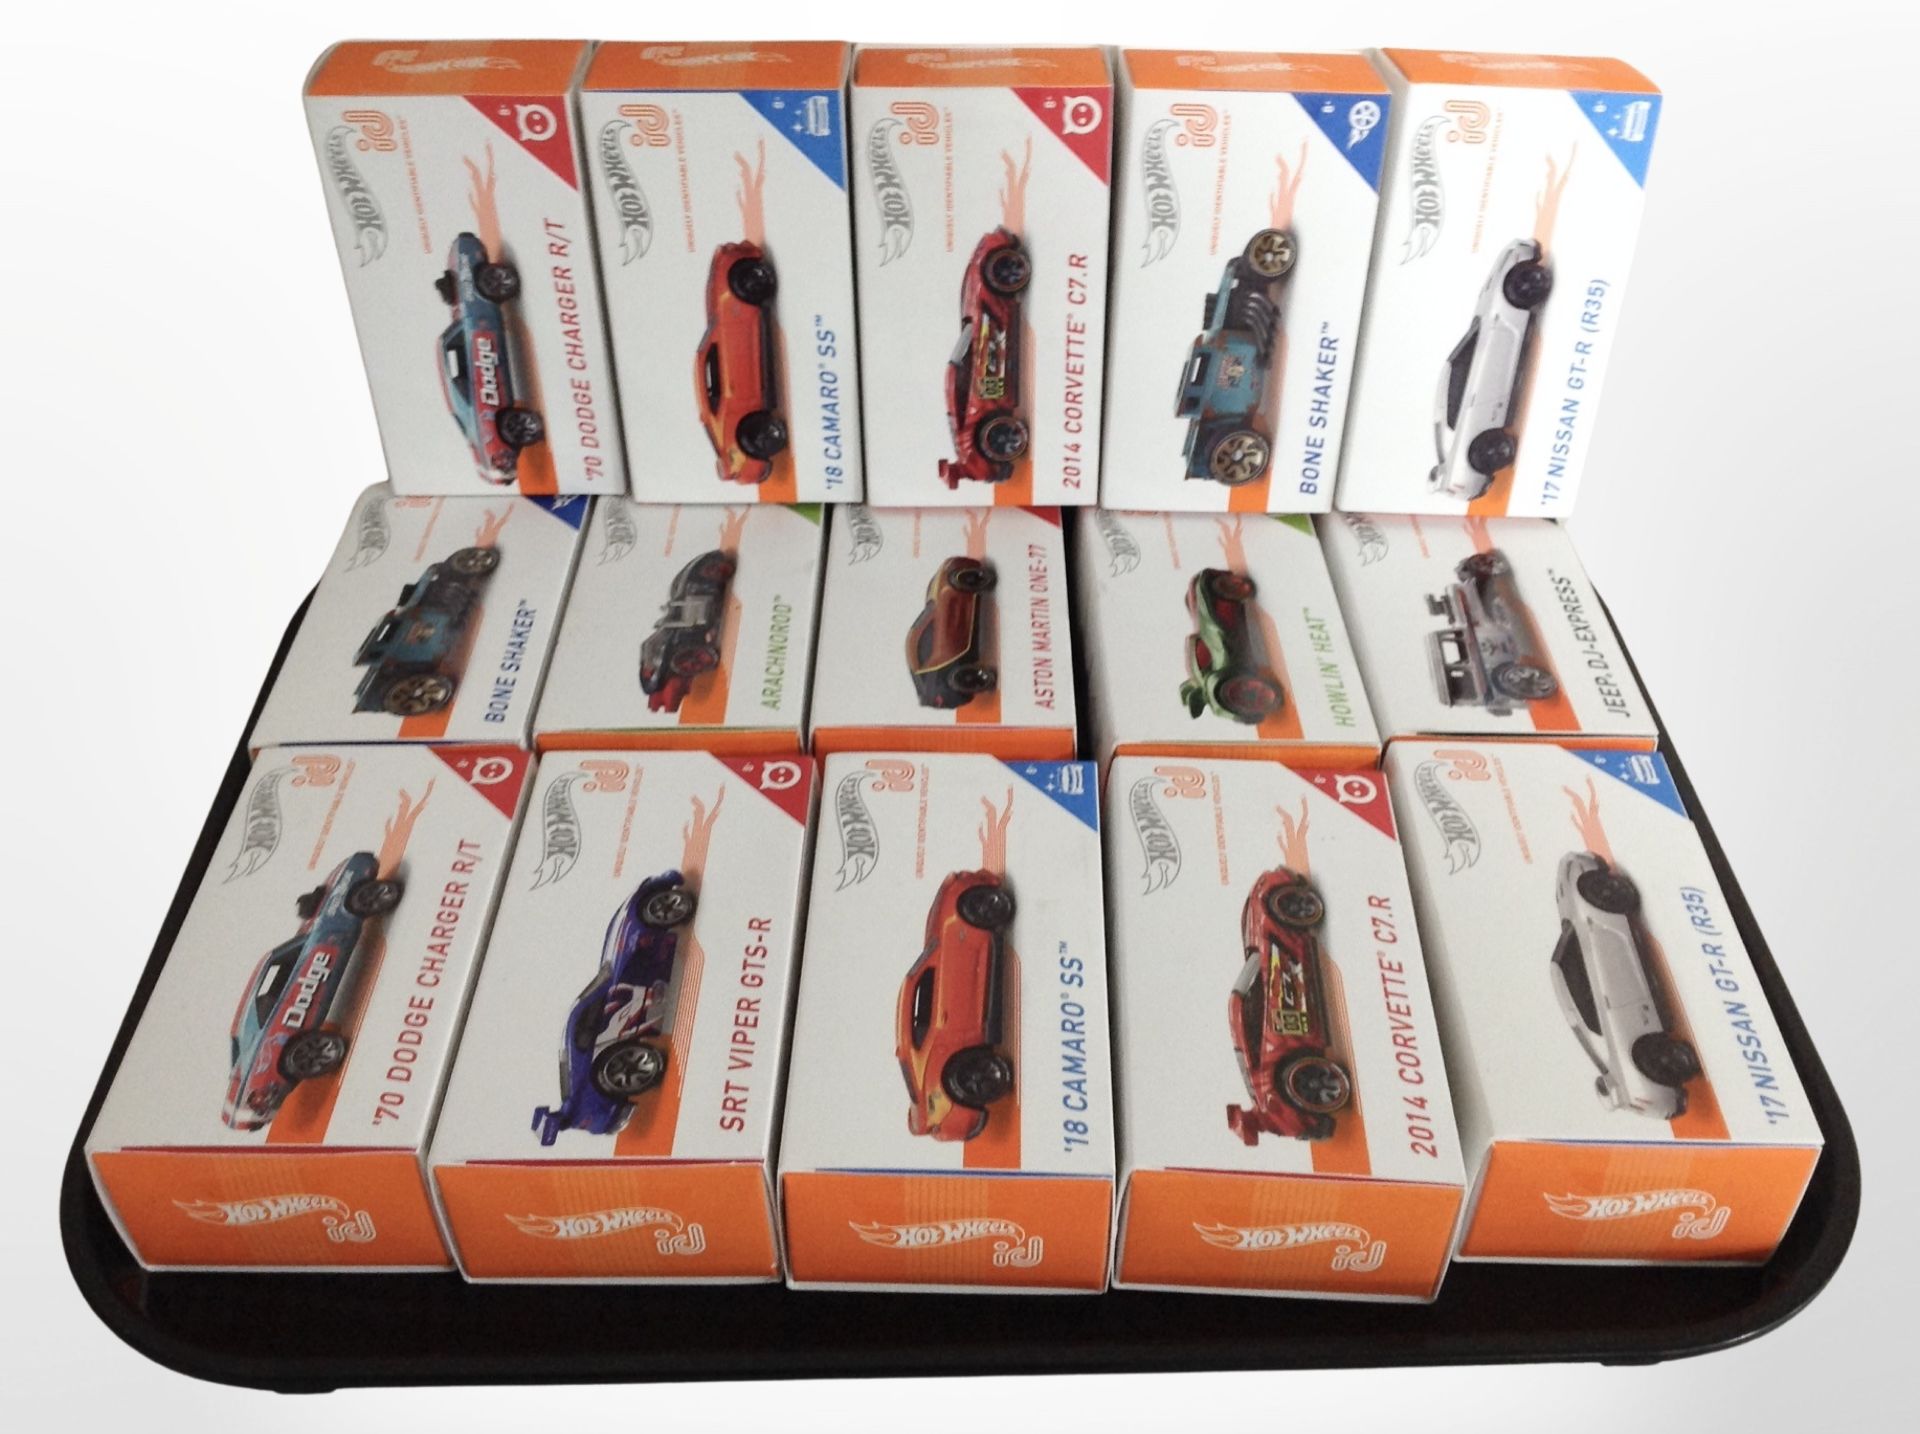 15 Mattel Hot Wheels models, boxed.